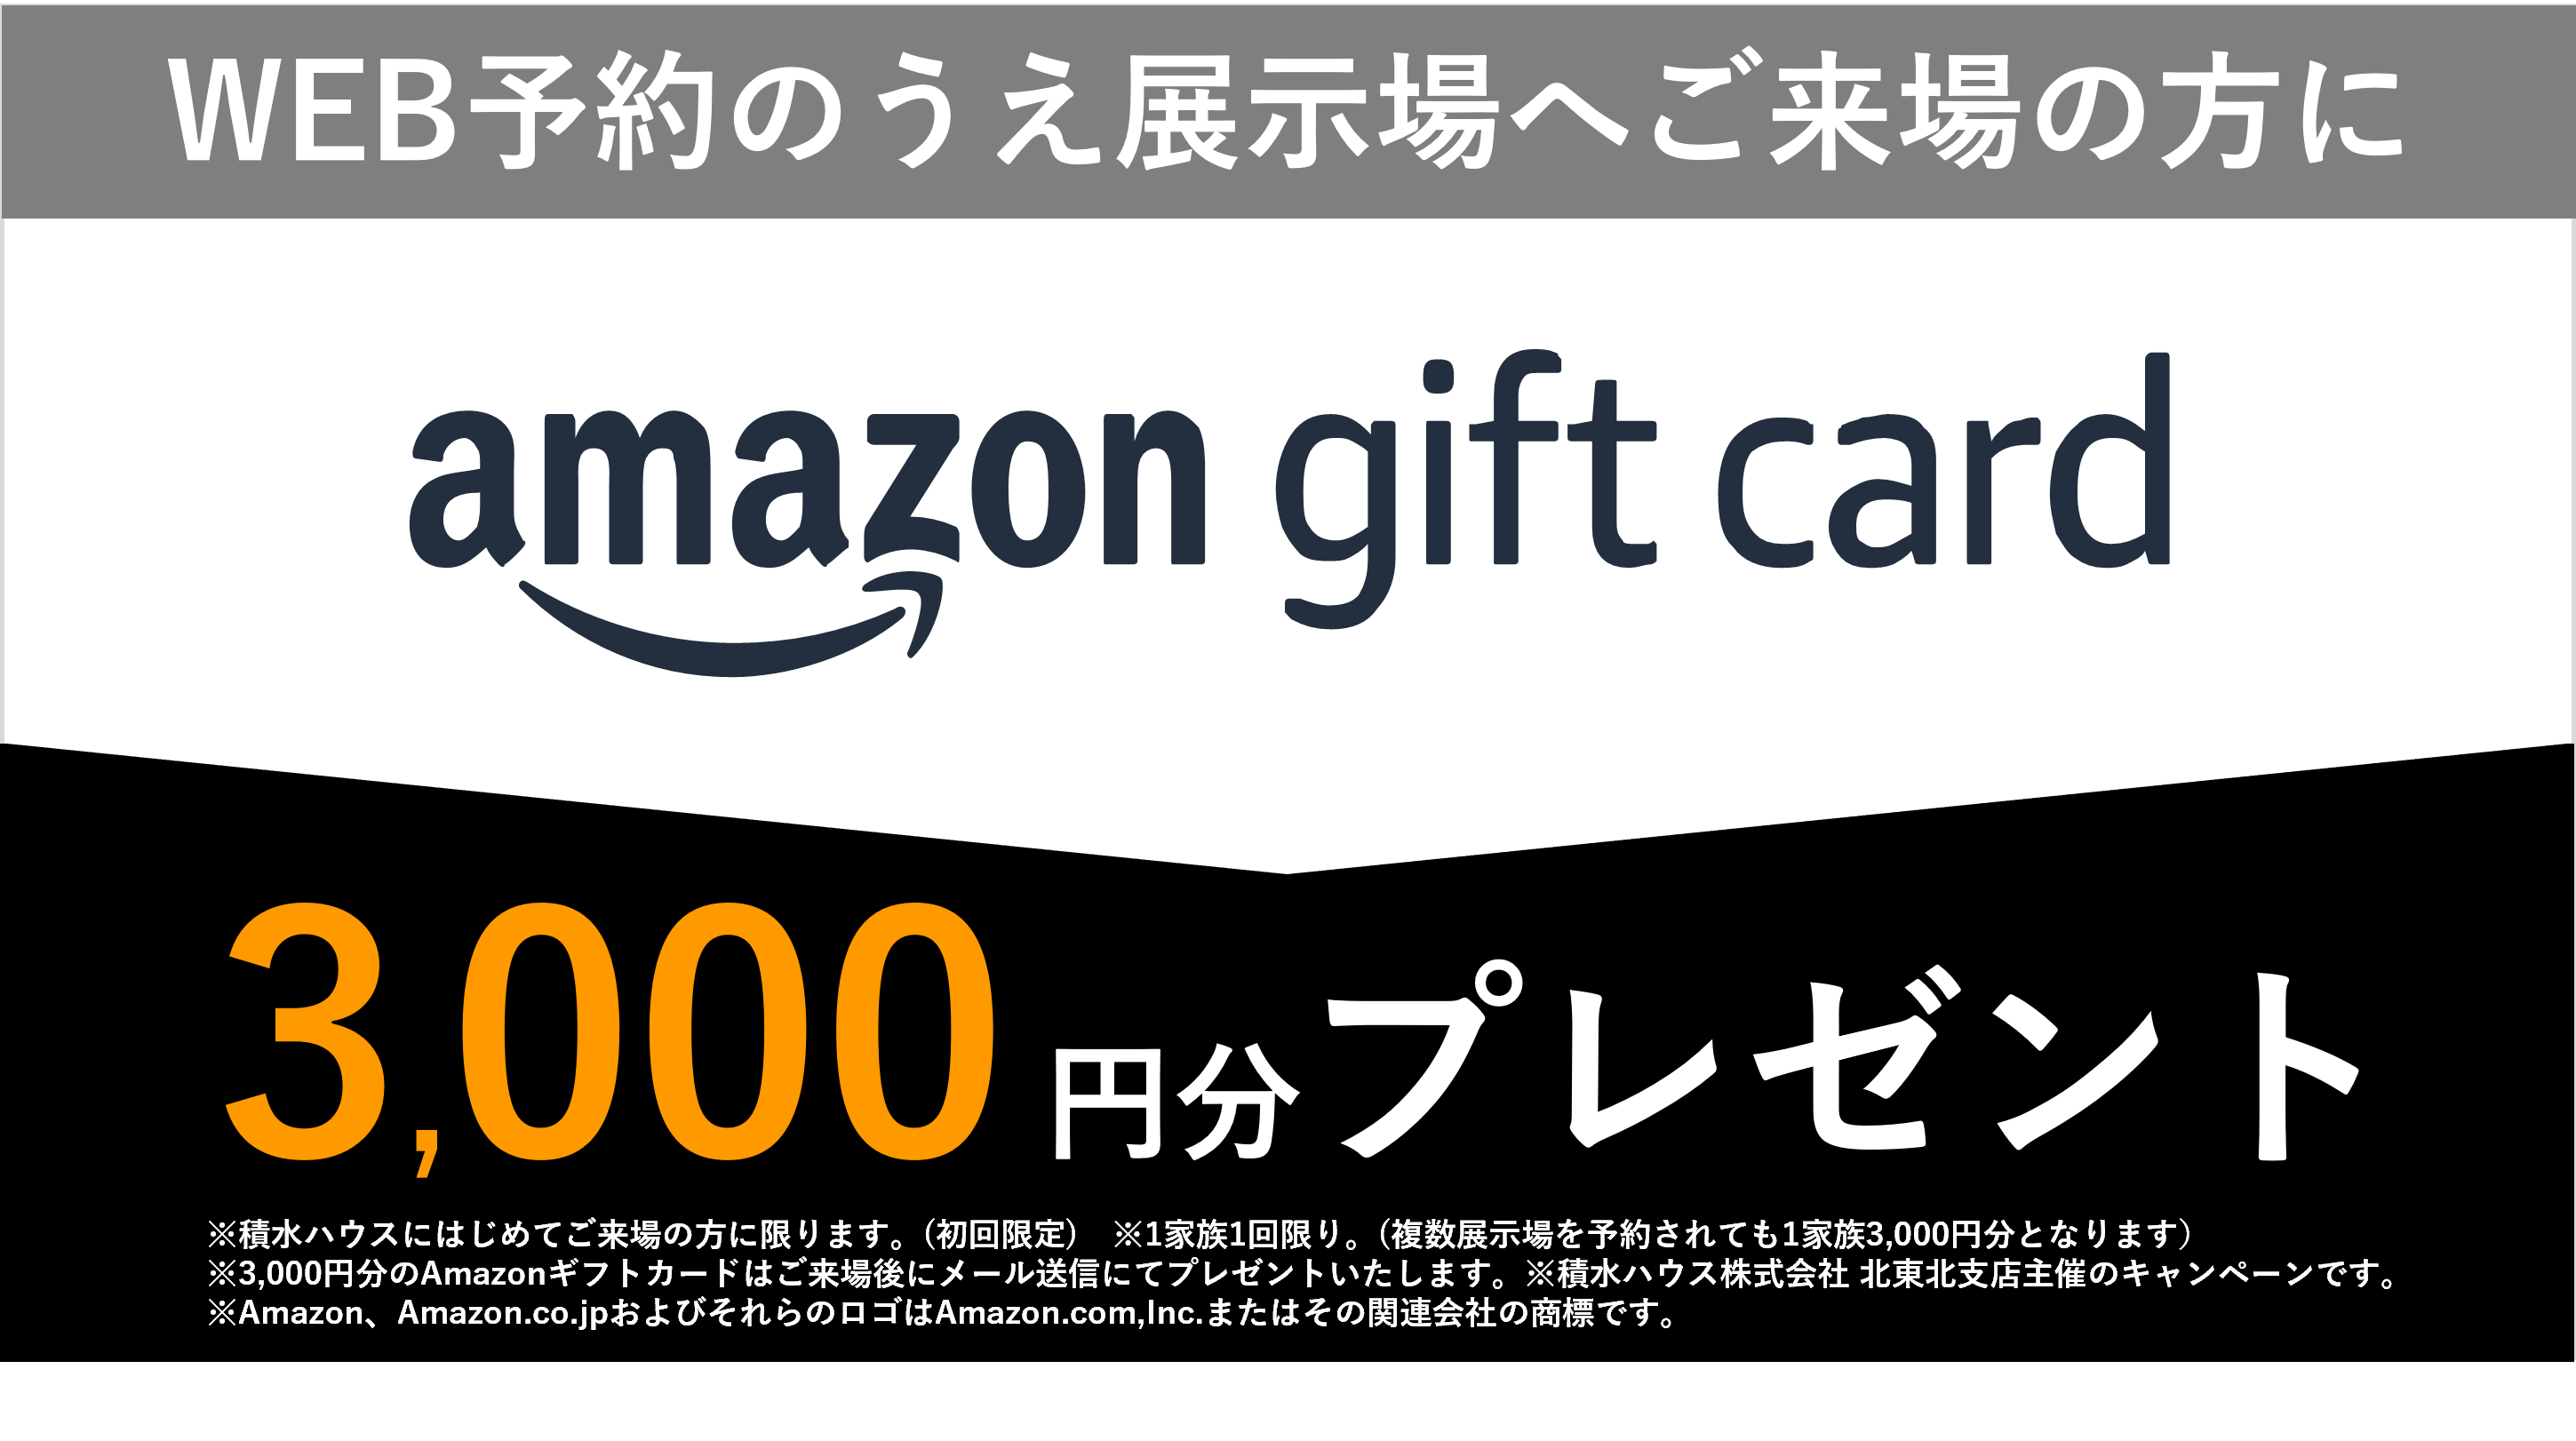 WEB来場予約特典 アマゾンギフトカード3,000円分プレゼント